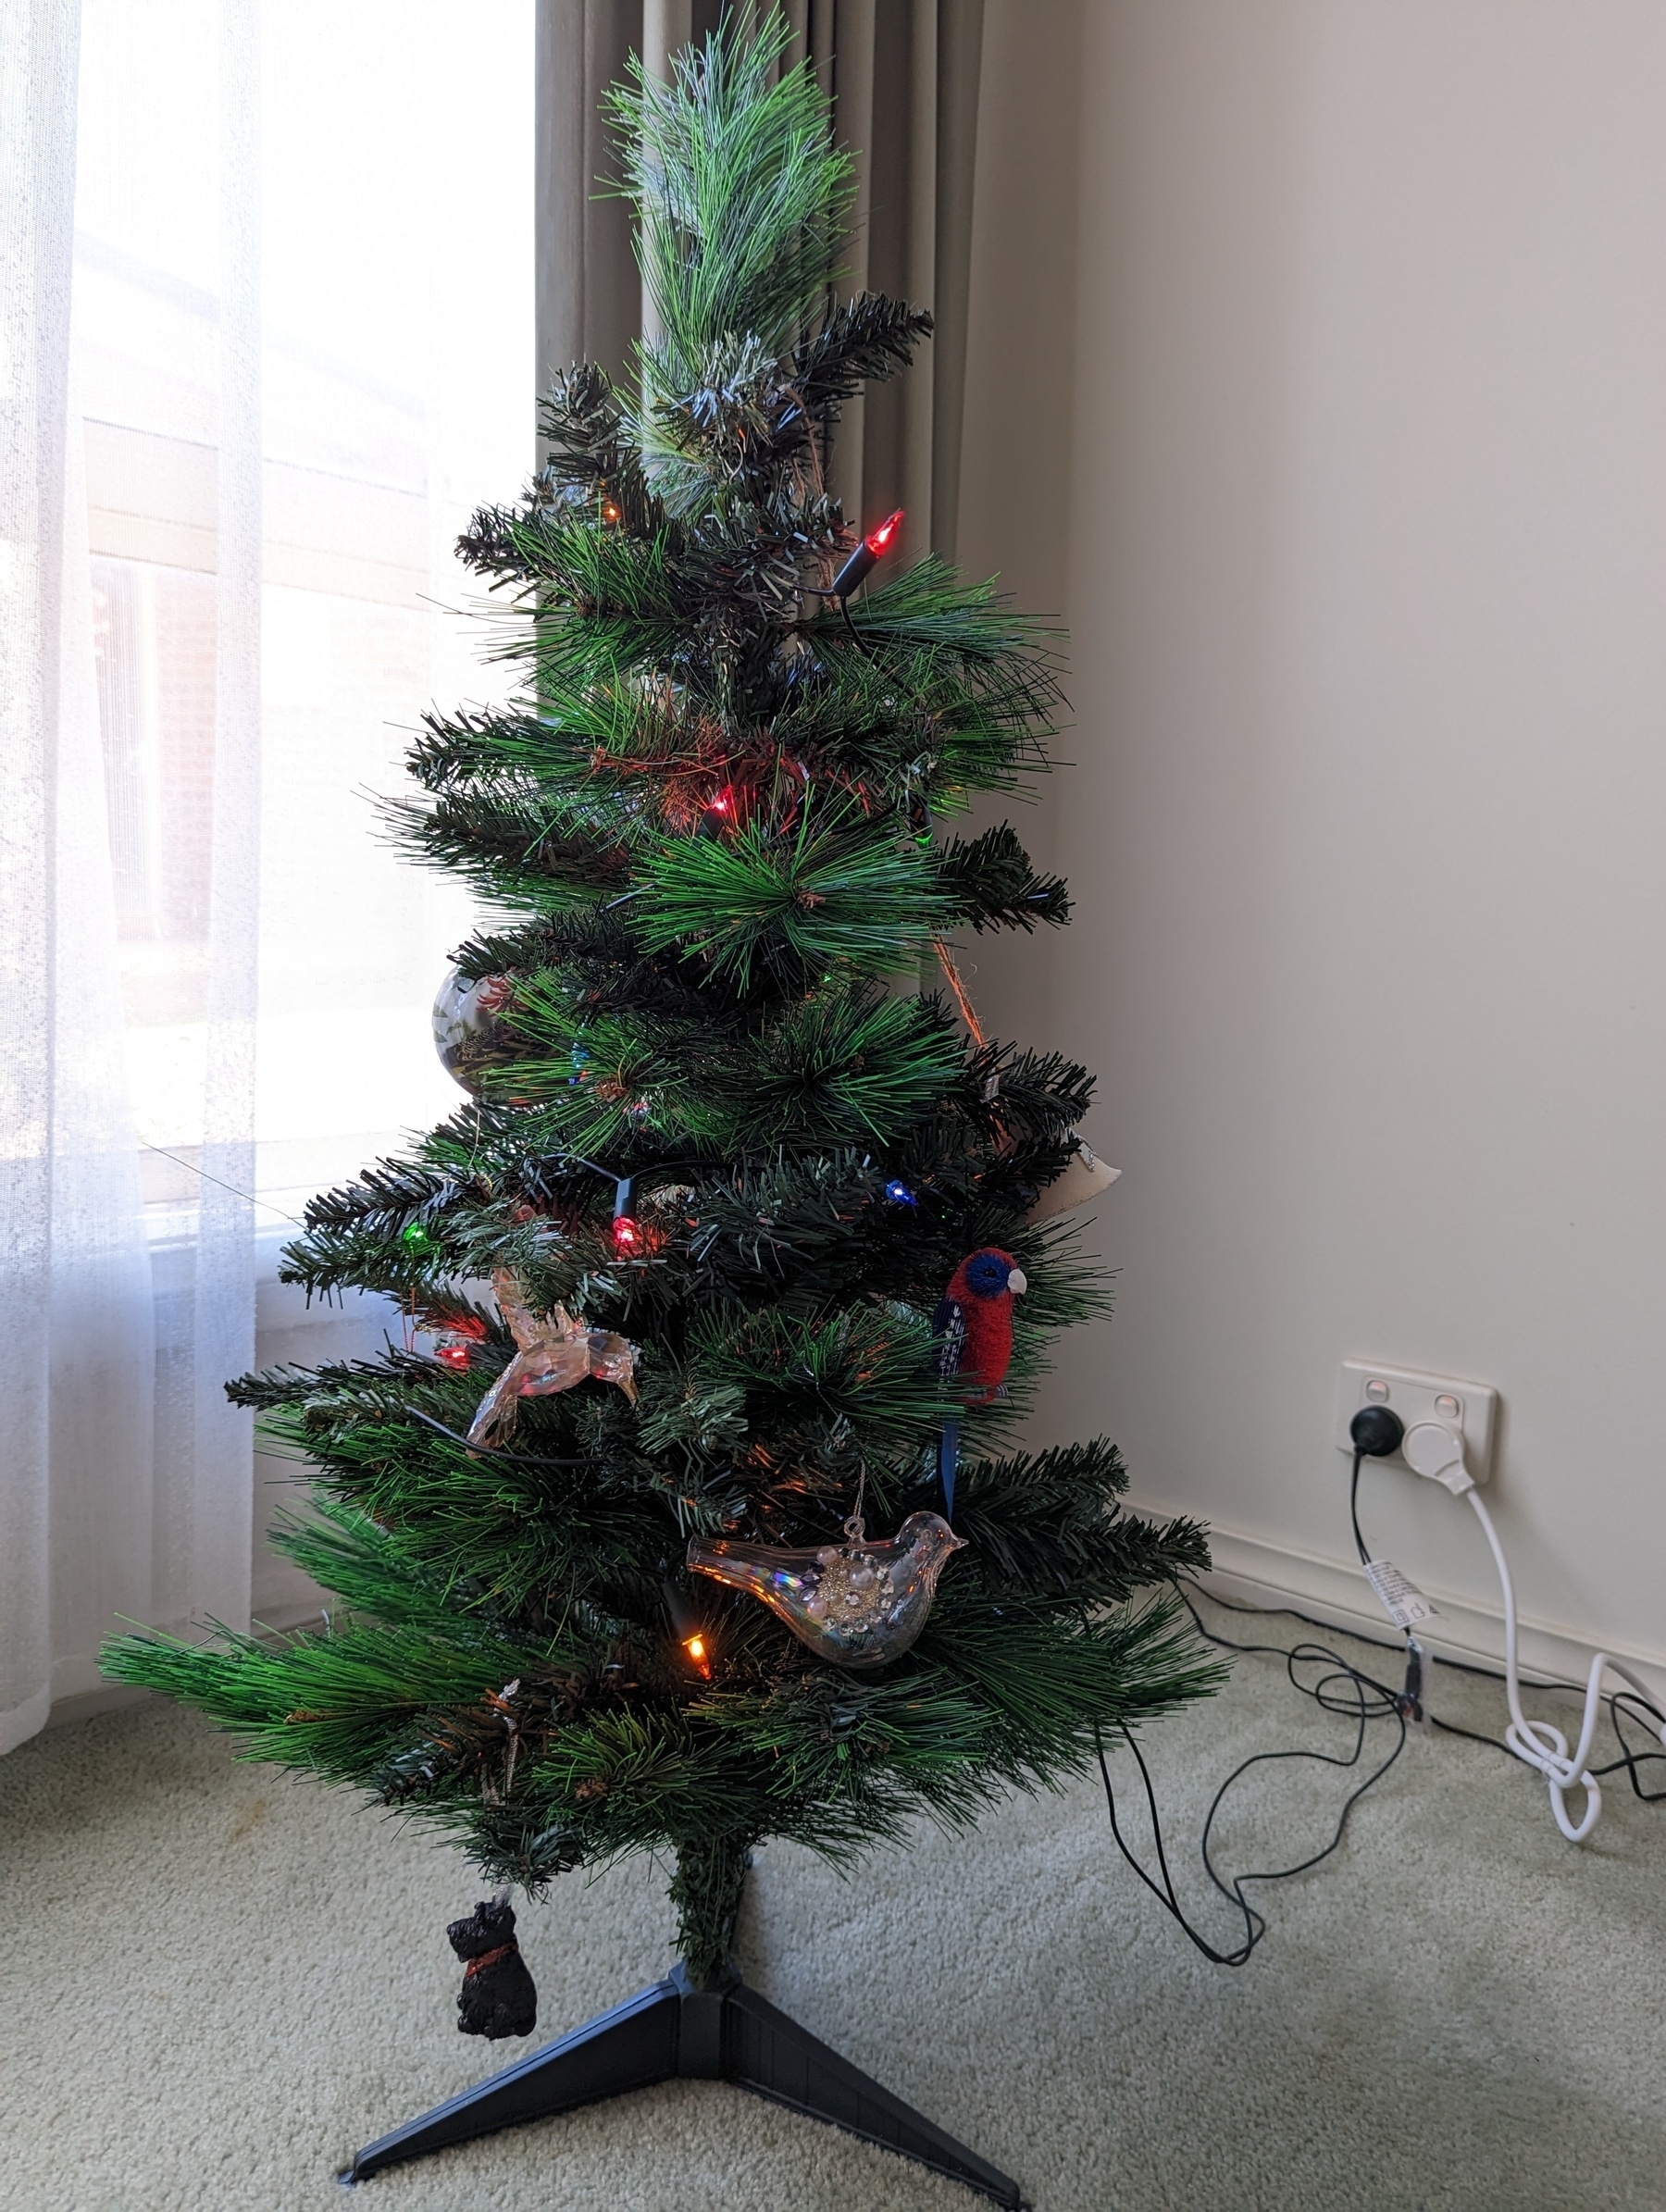 Christmas tree with lights on and a fair few bird ordainments